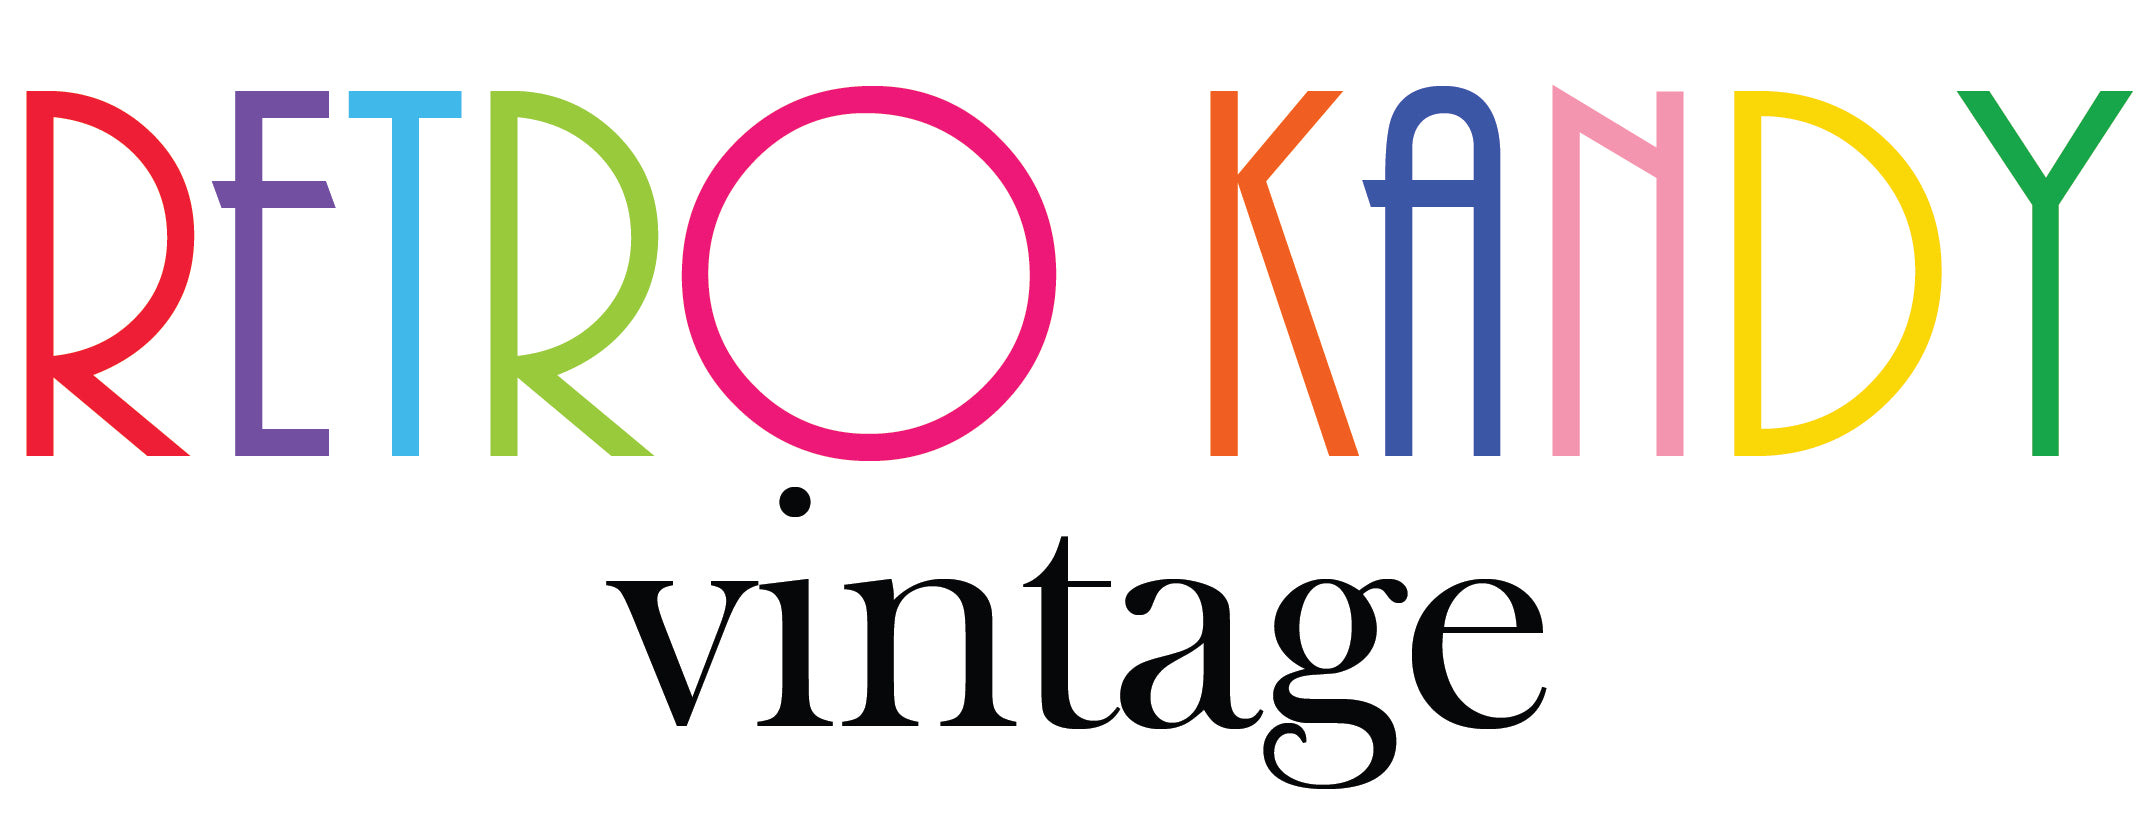 Retro Kandy Collection – Retro Kandy Vintage